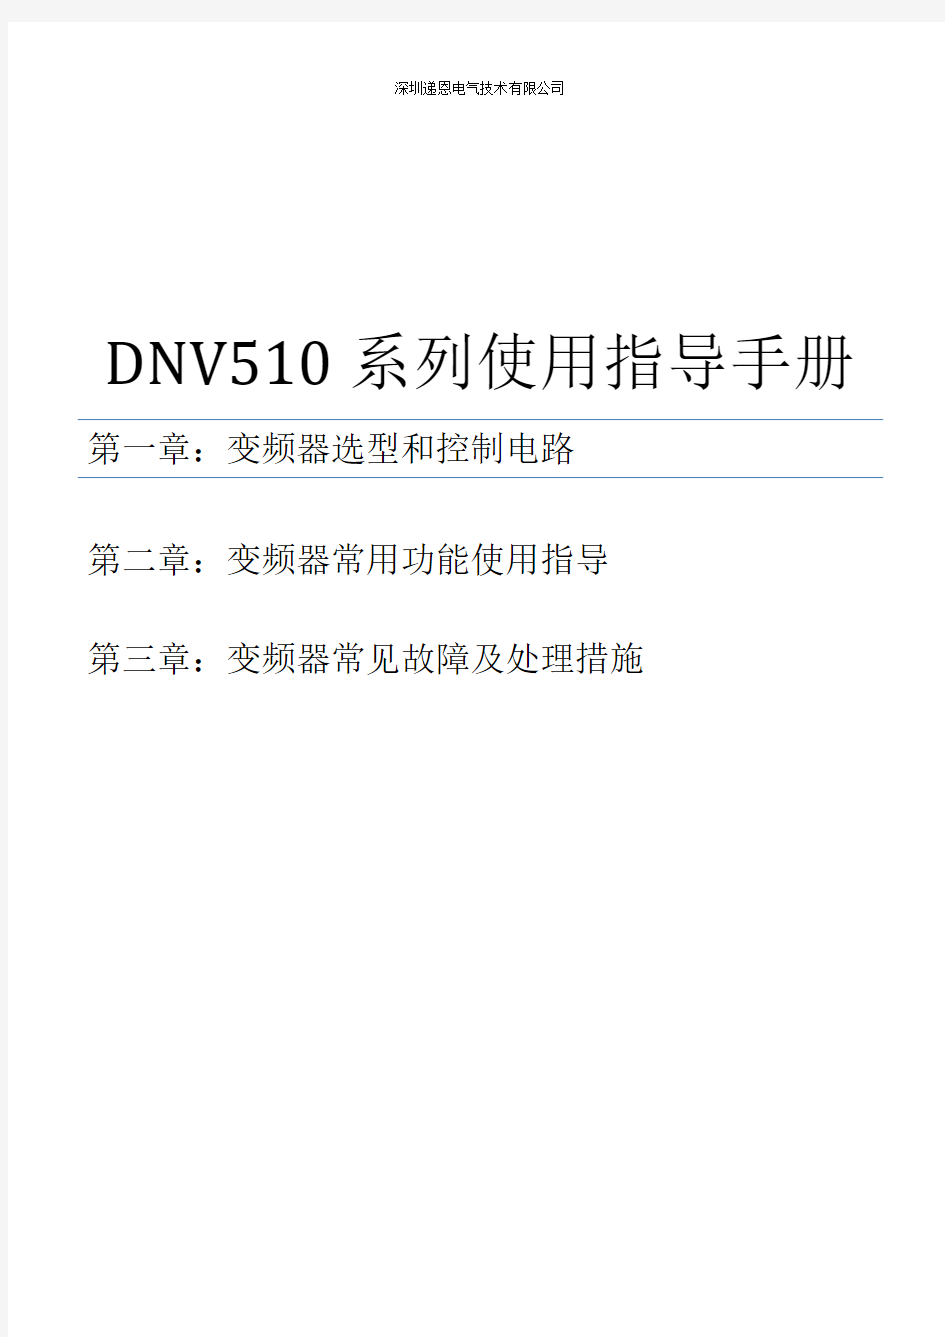 DNV510变频器简易使用指导手册